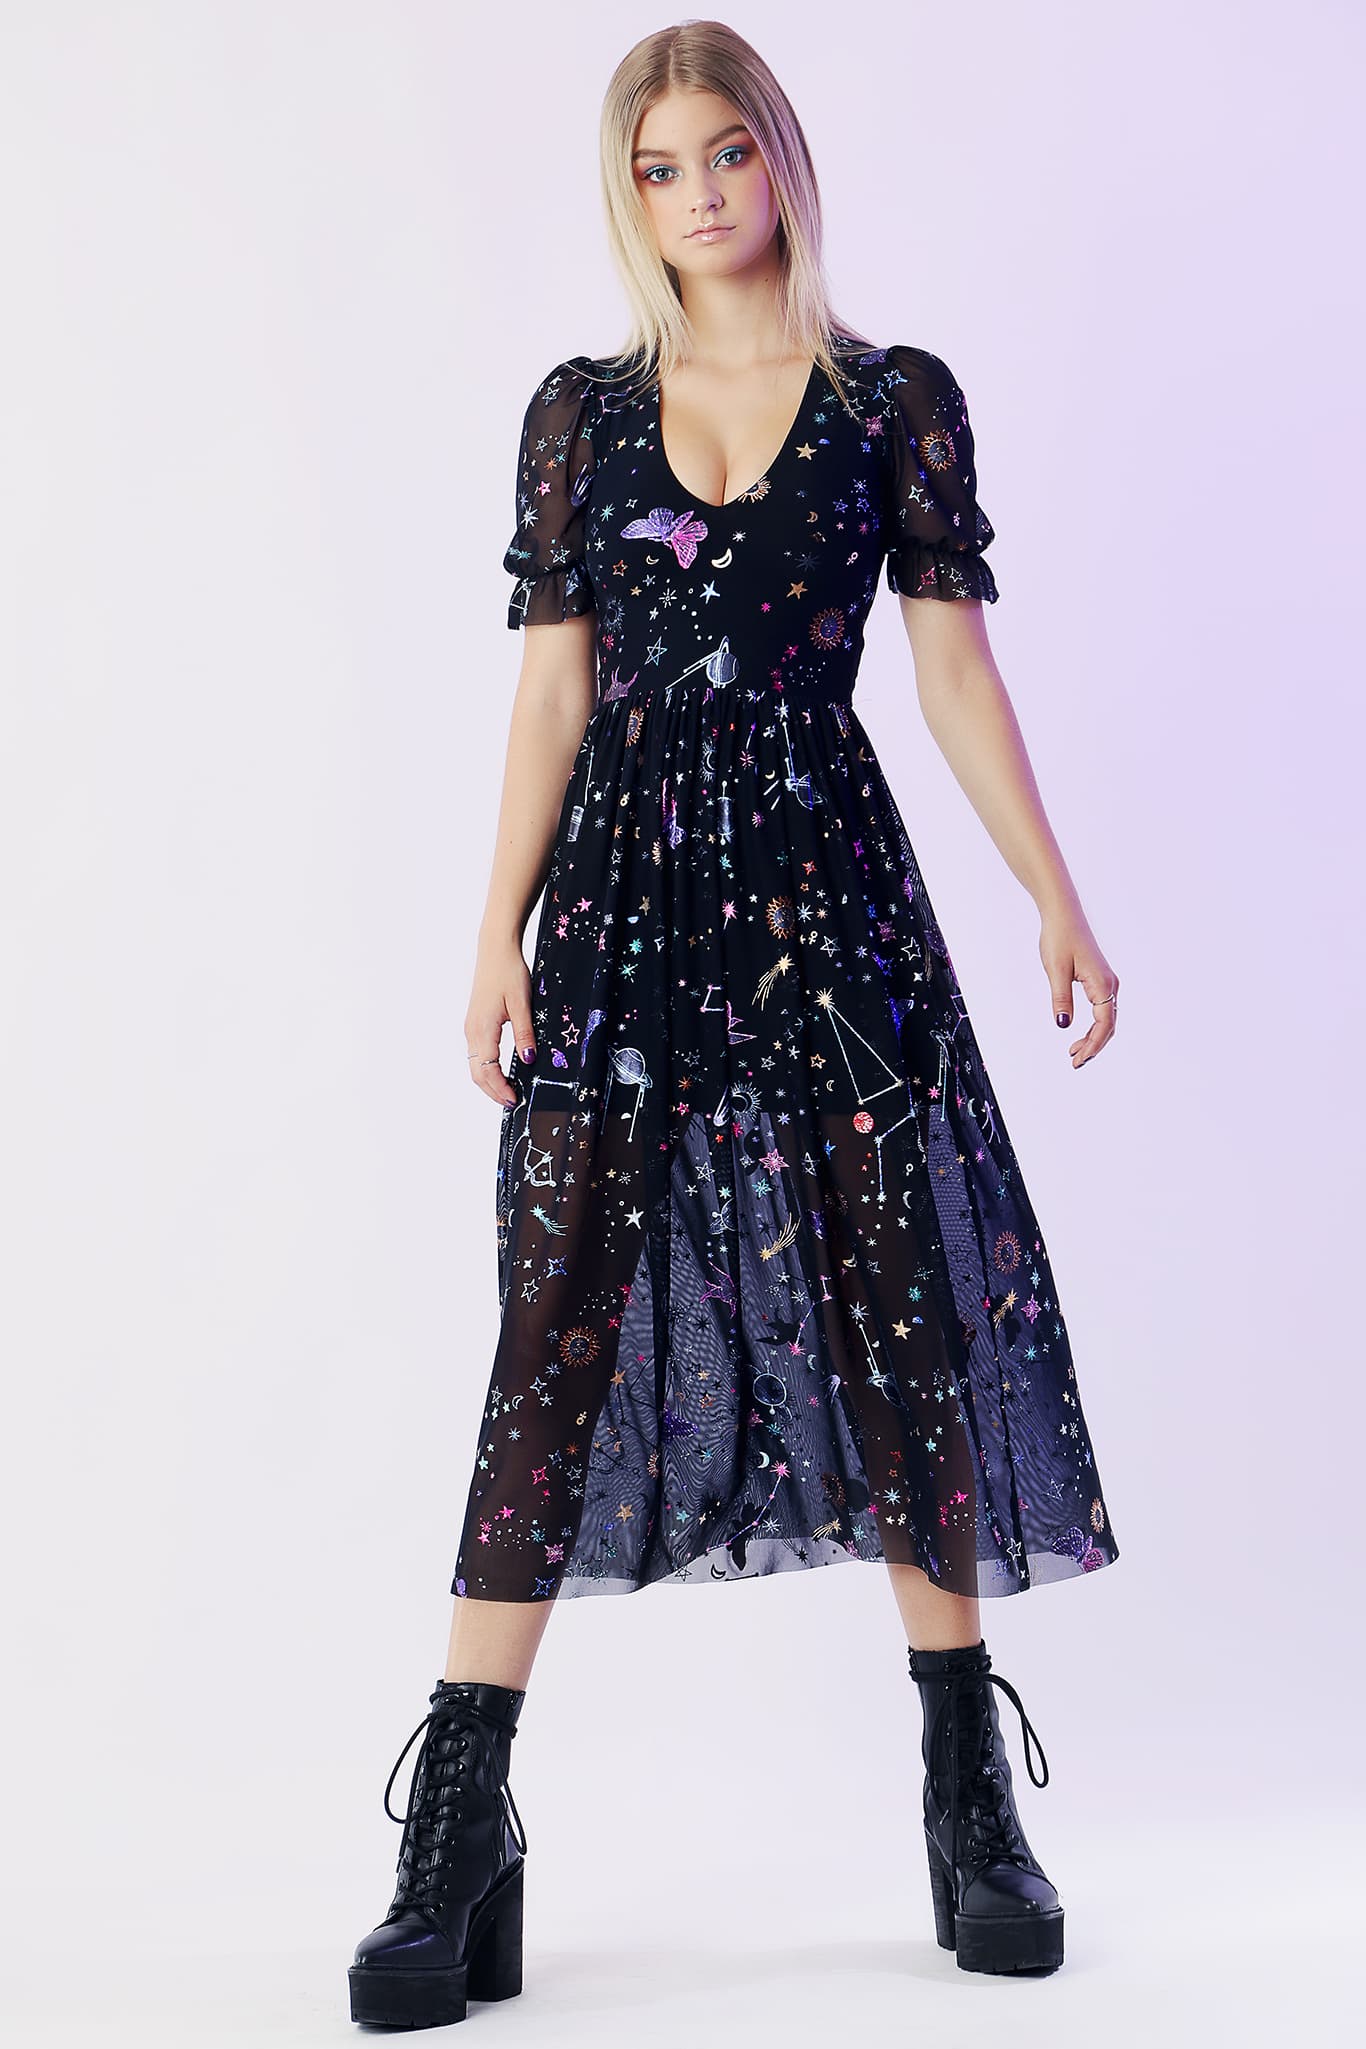 Celestial Sketch Stellar Dress - Limited